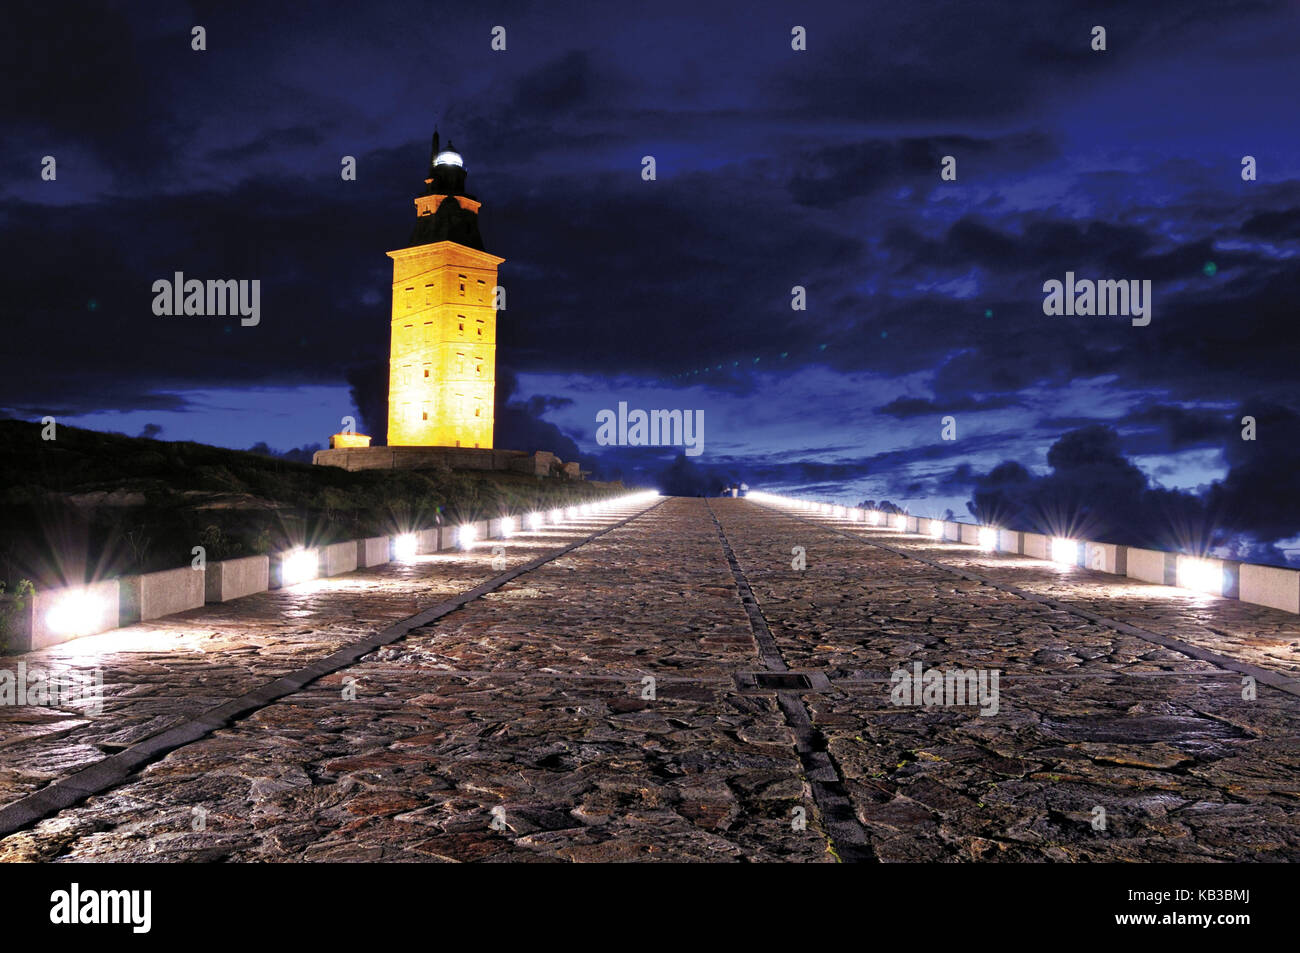 Spain, Galicia, At night illuminated Roman lighthouse 'Torre Herucles' in La Coruna, Stock Photo